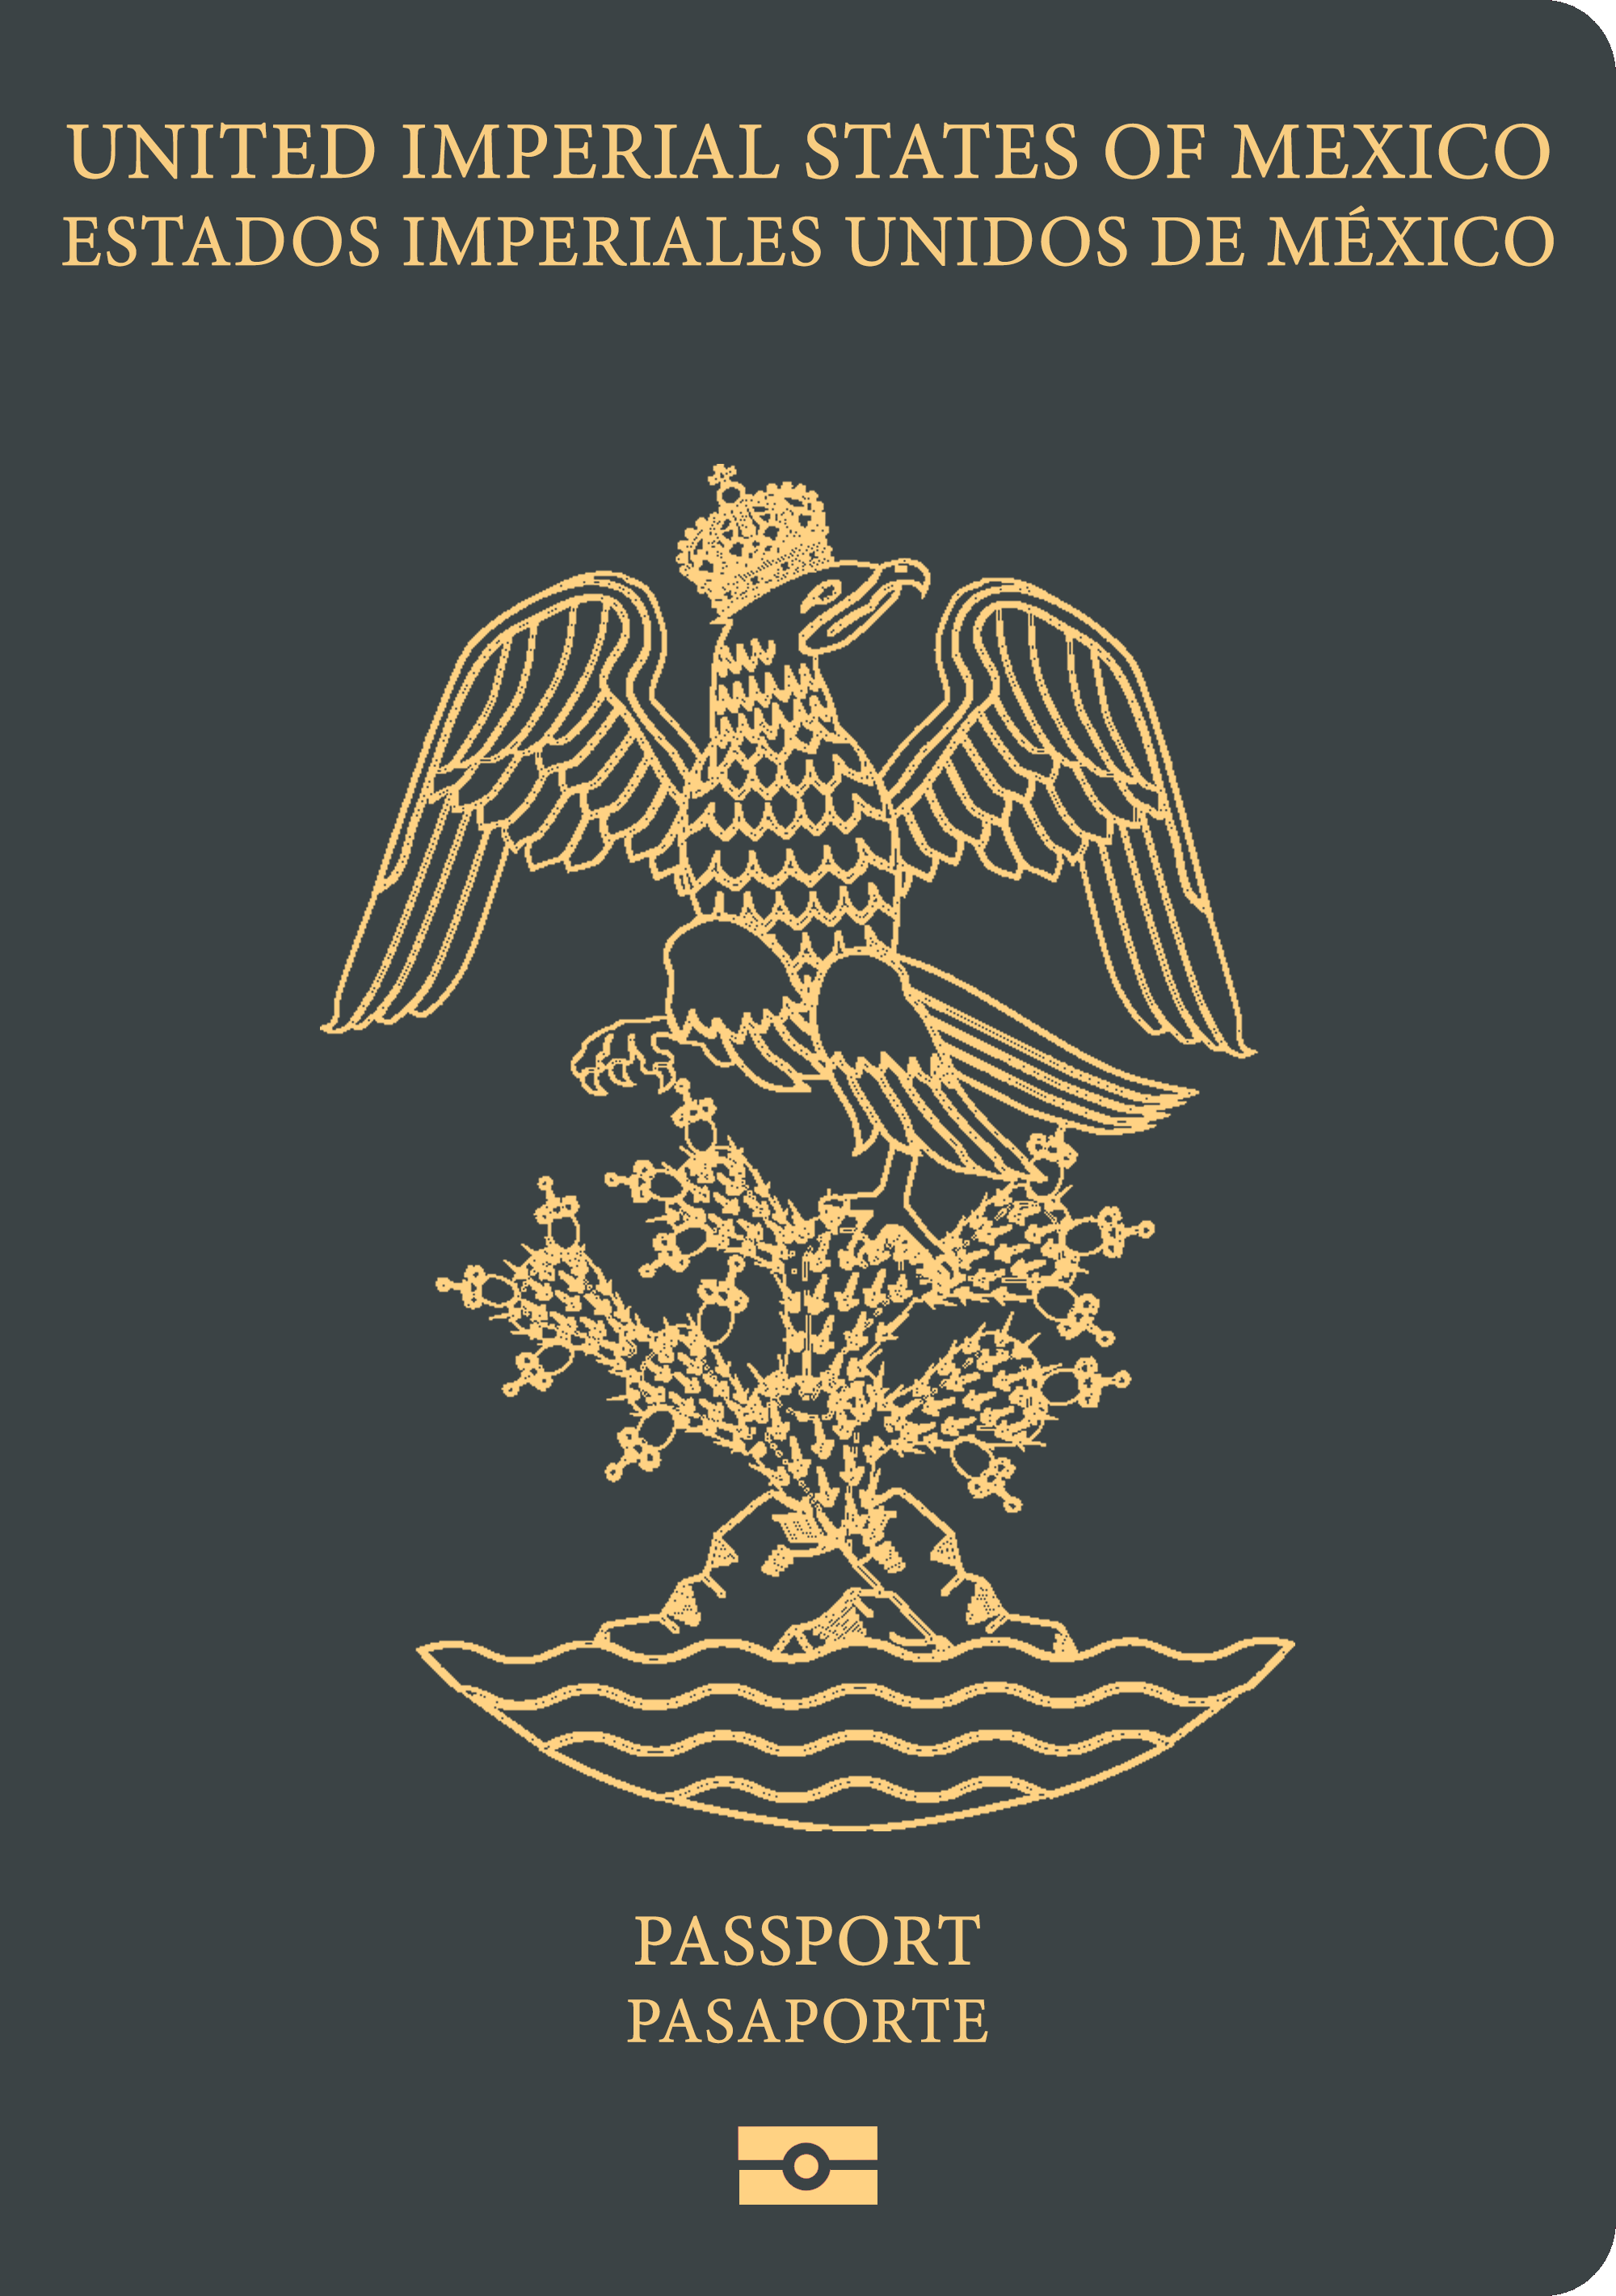 ah_passports__mexico__revolution__redux__by_kitfisto1997-db4uerm.png